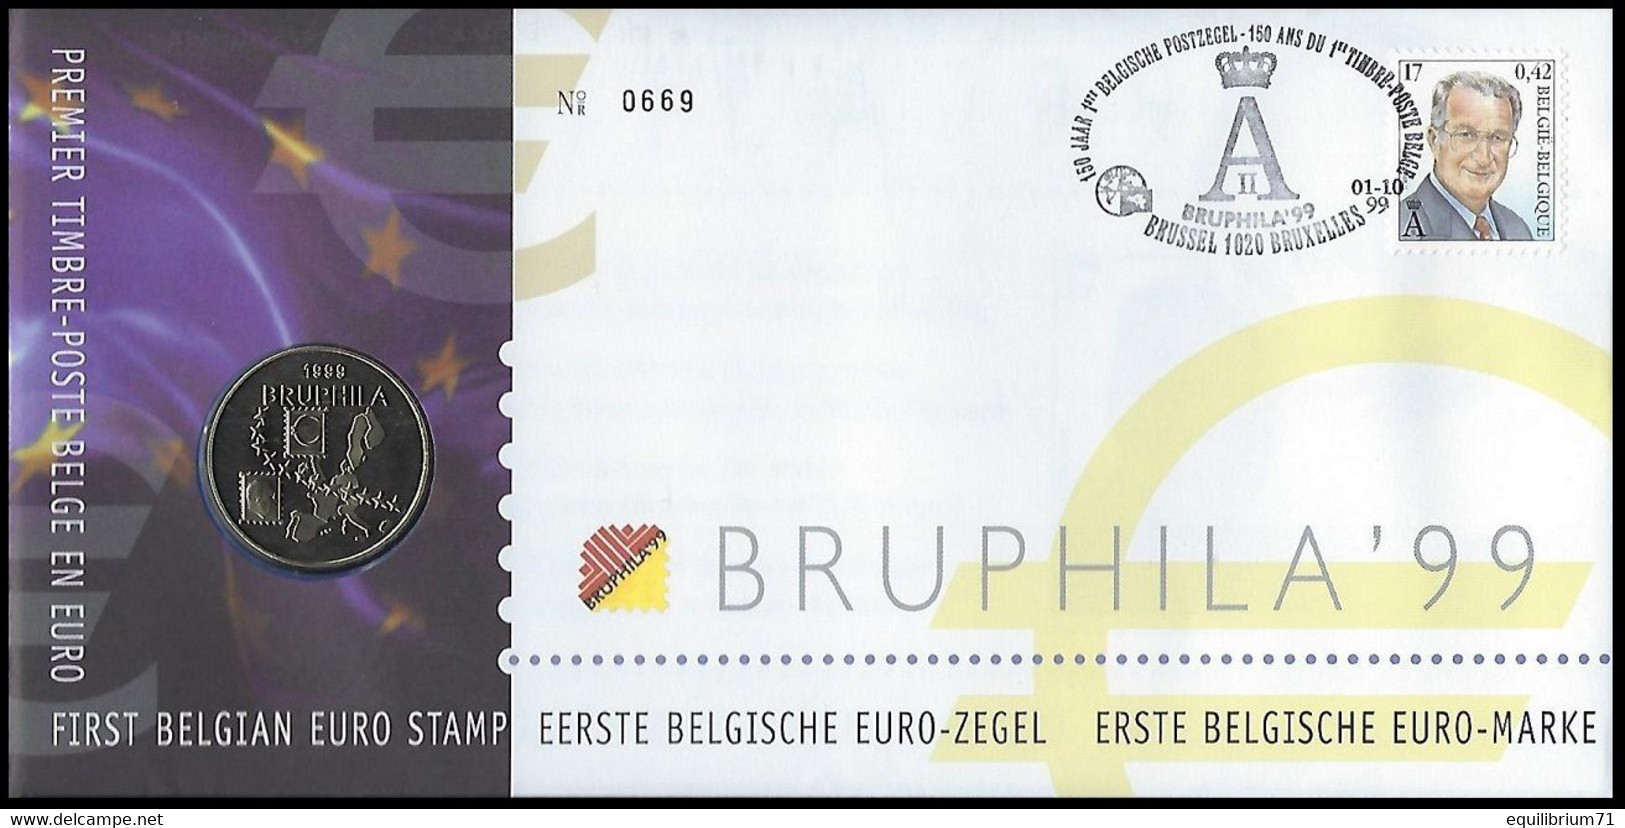 NUMISLETTER 2840° - Bruphila'99 -  SM Roi Albert II / ZM Koning Albert II / HM König Albert II - BELGIQUE / BELGIË - Numisletters